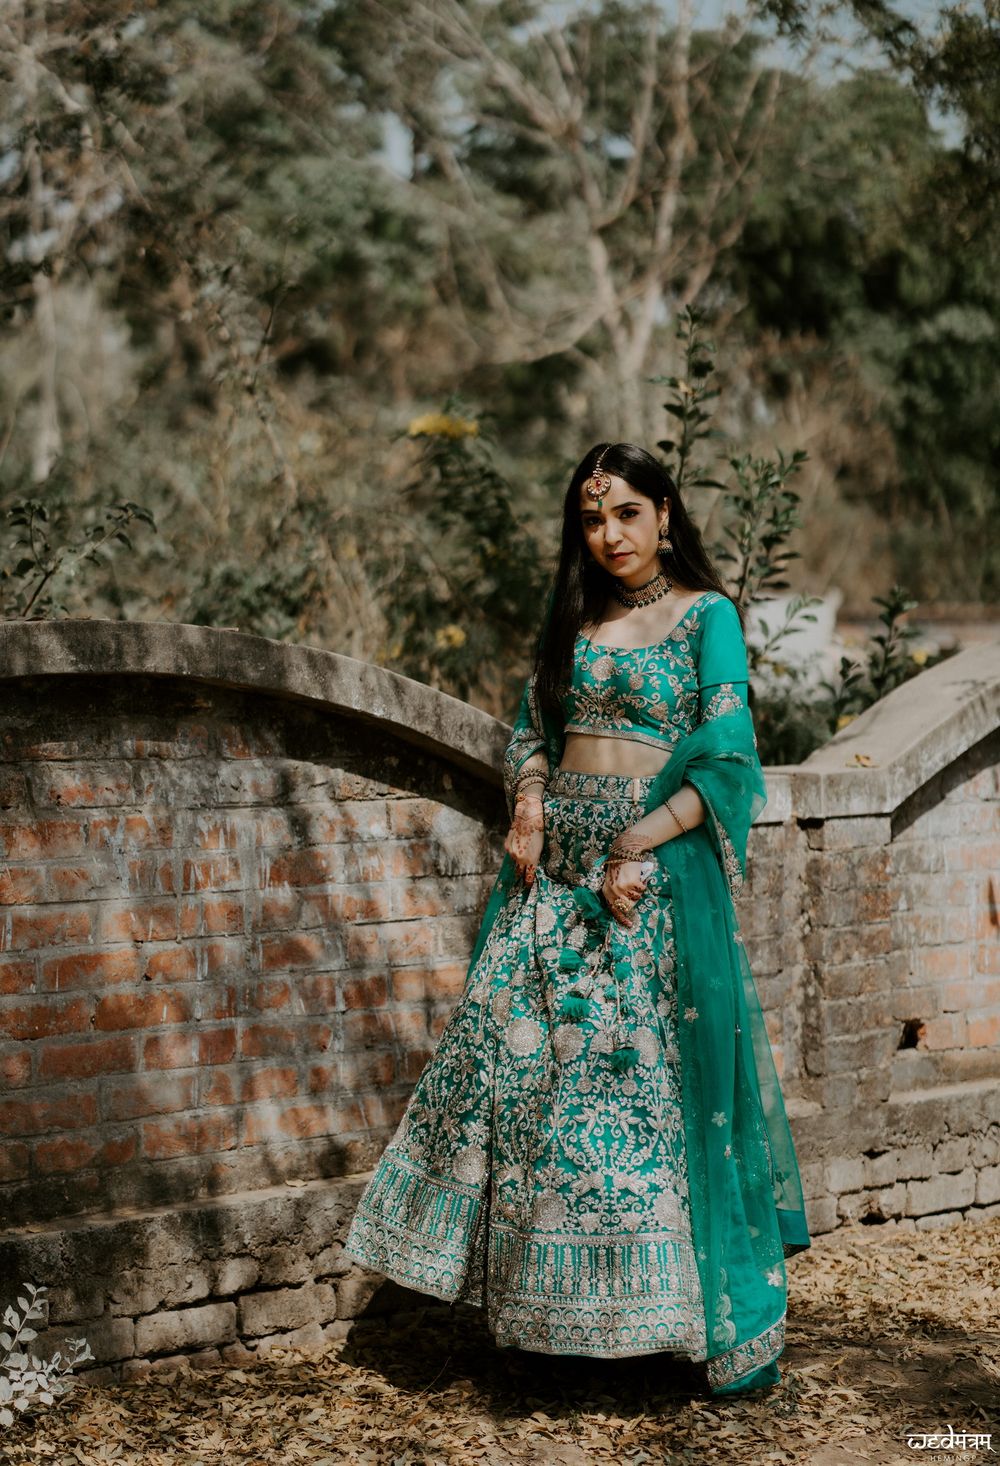 Photo of Bride wearing teal green lehenga.